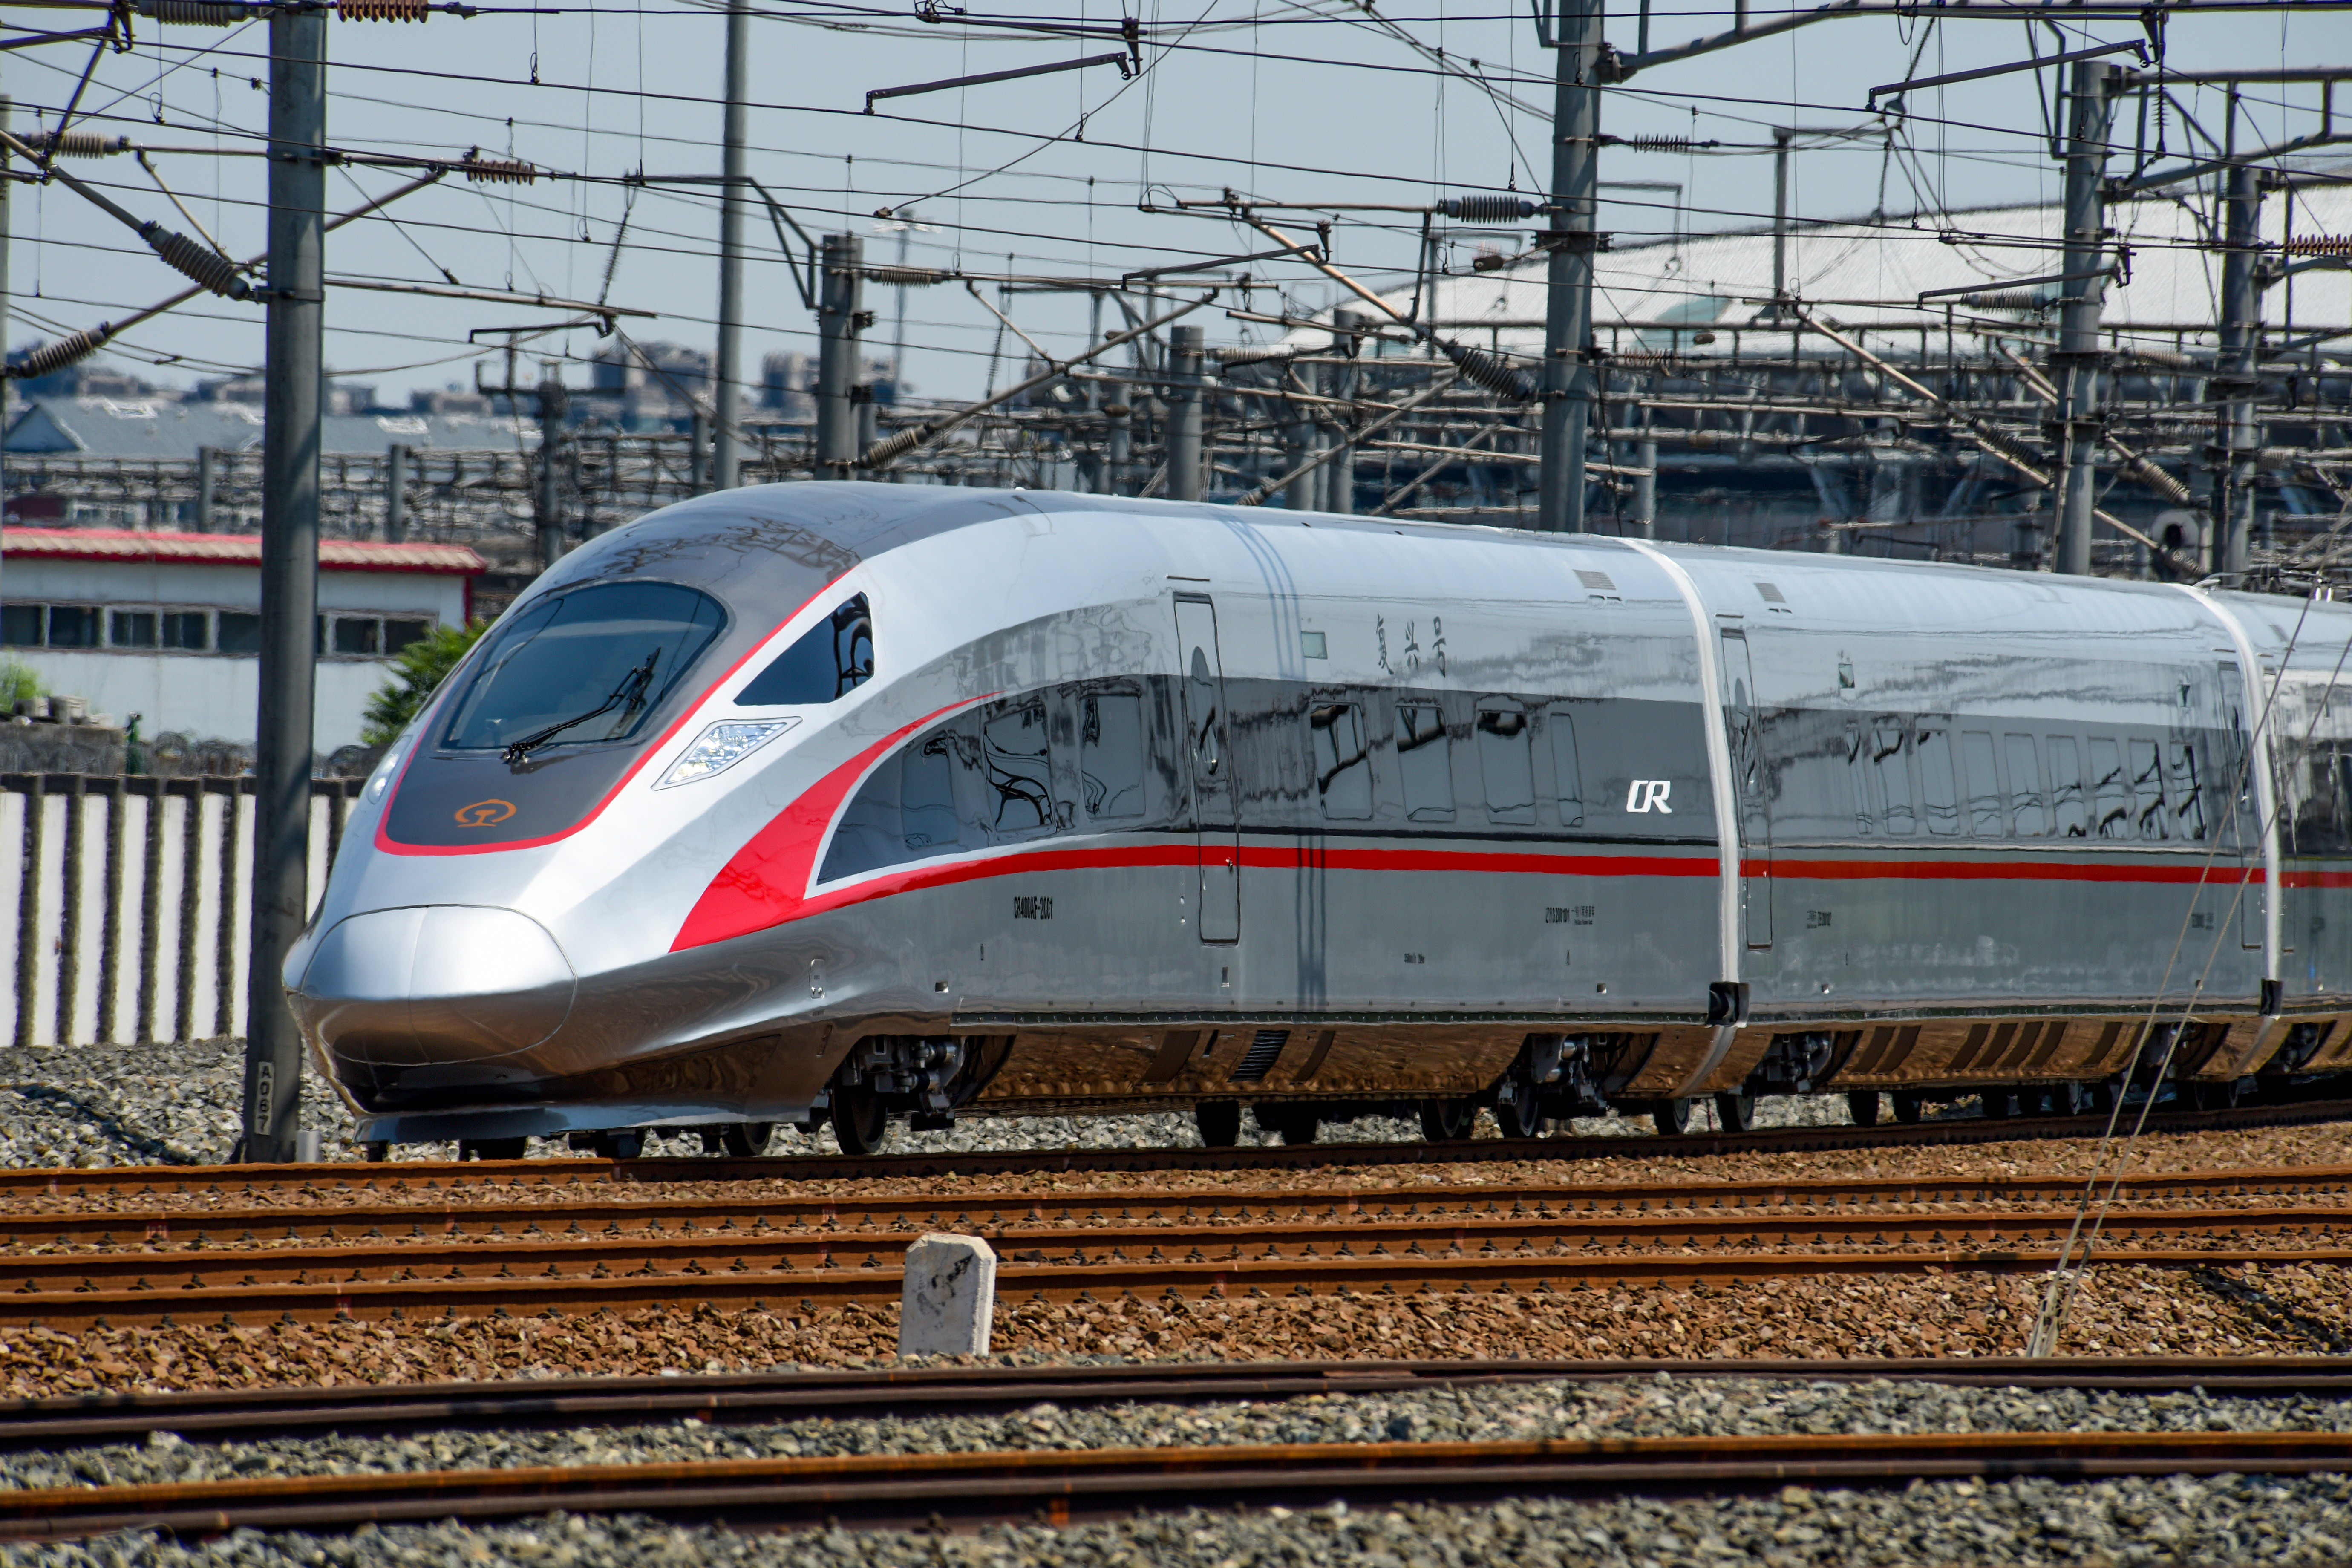 High-speed rail in China - Wikipedia